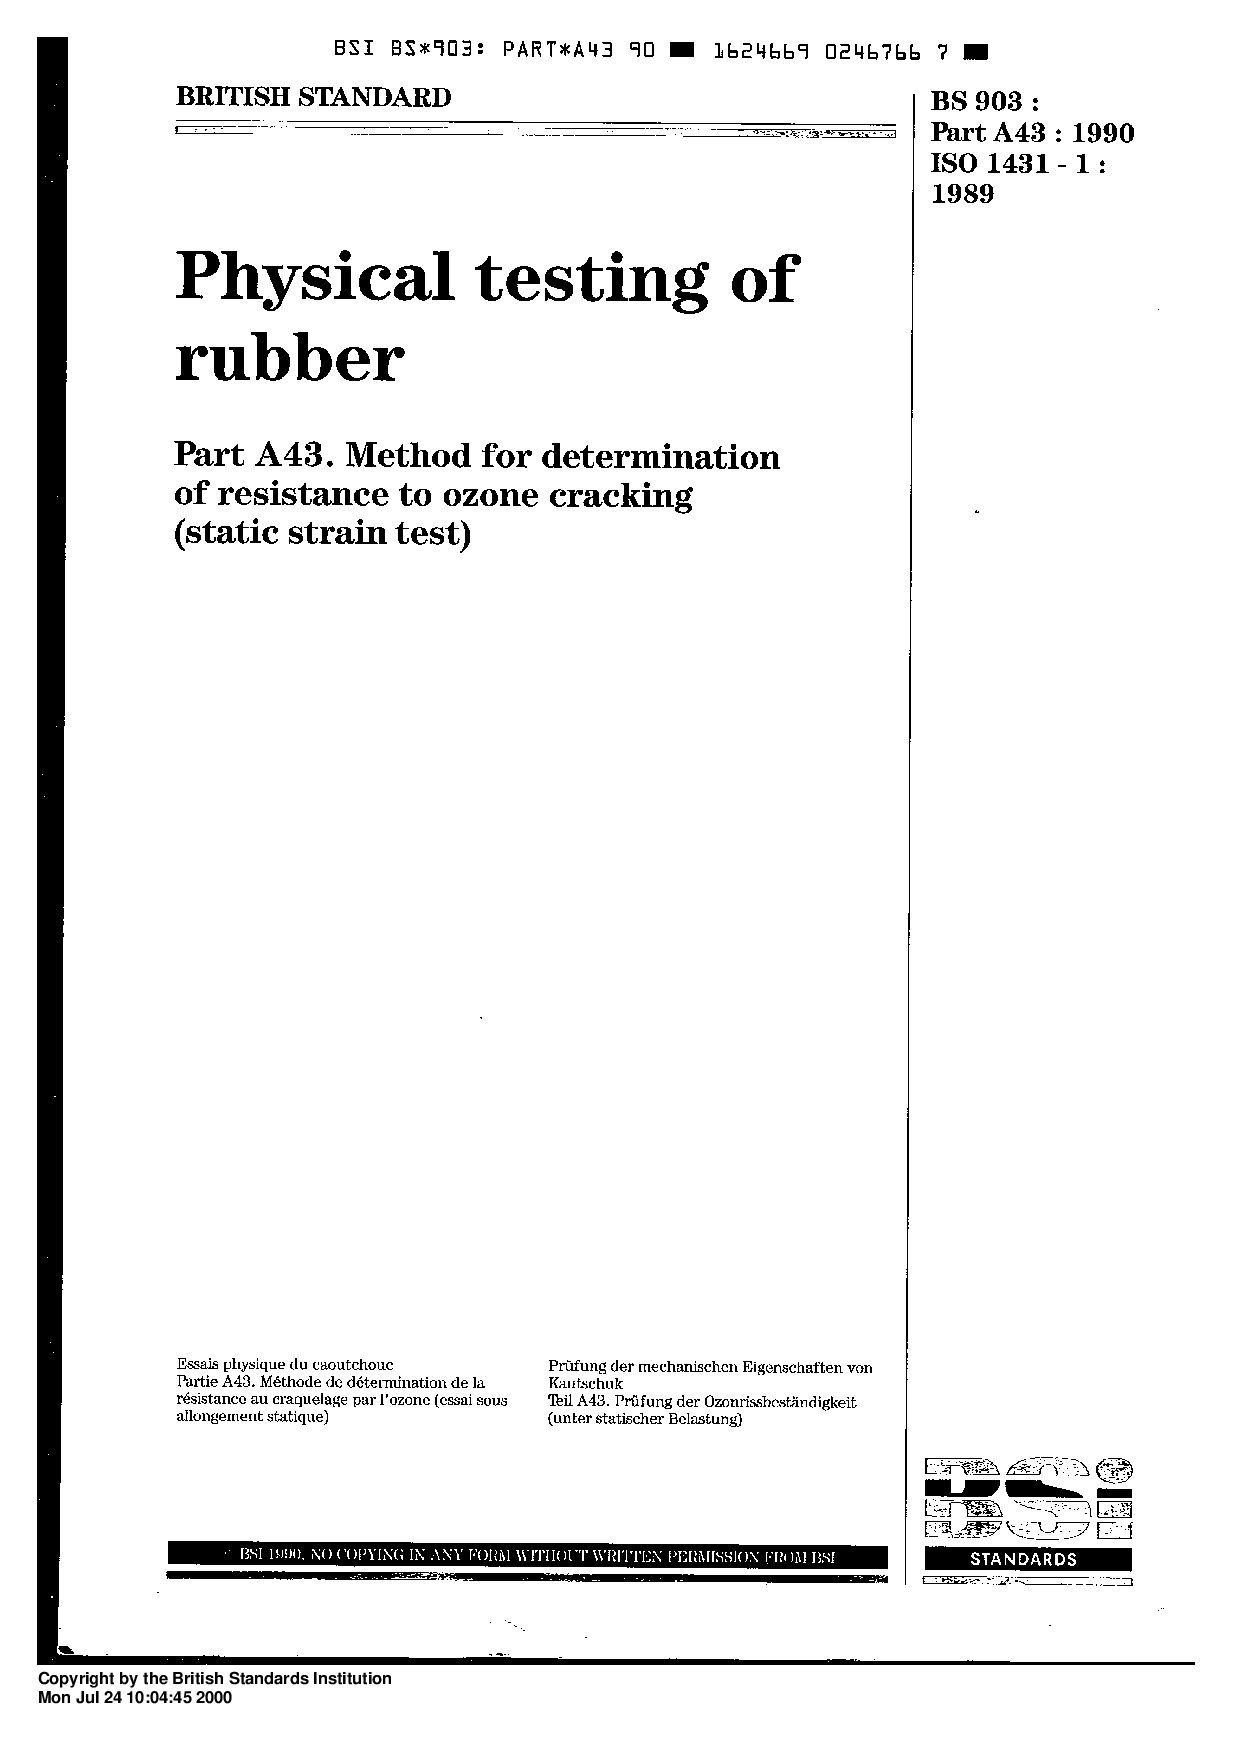 ISO 1431-1:1989封面图